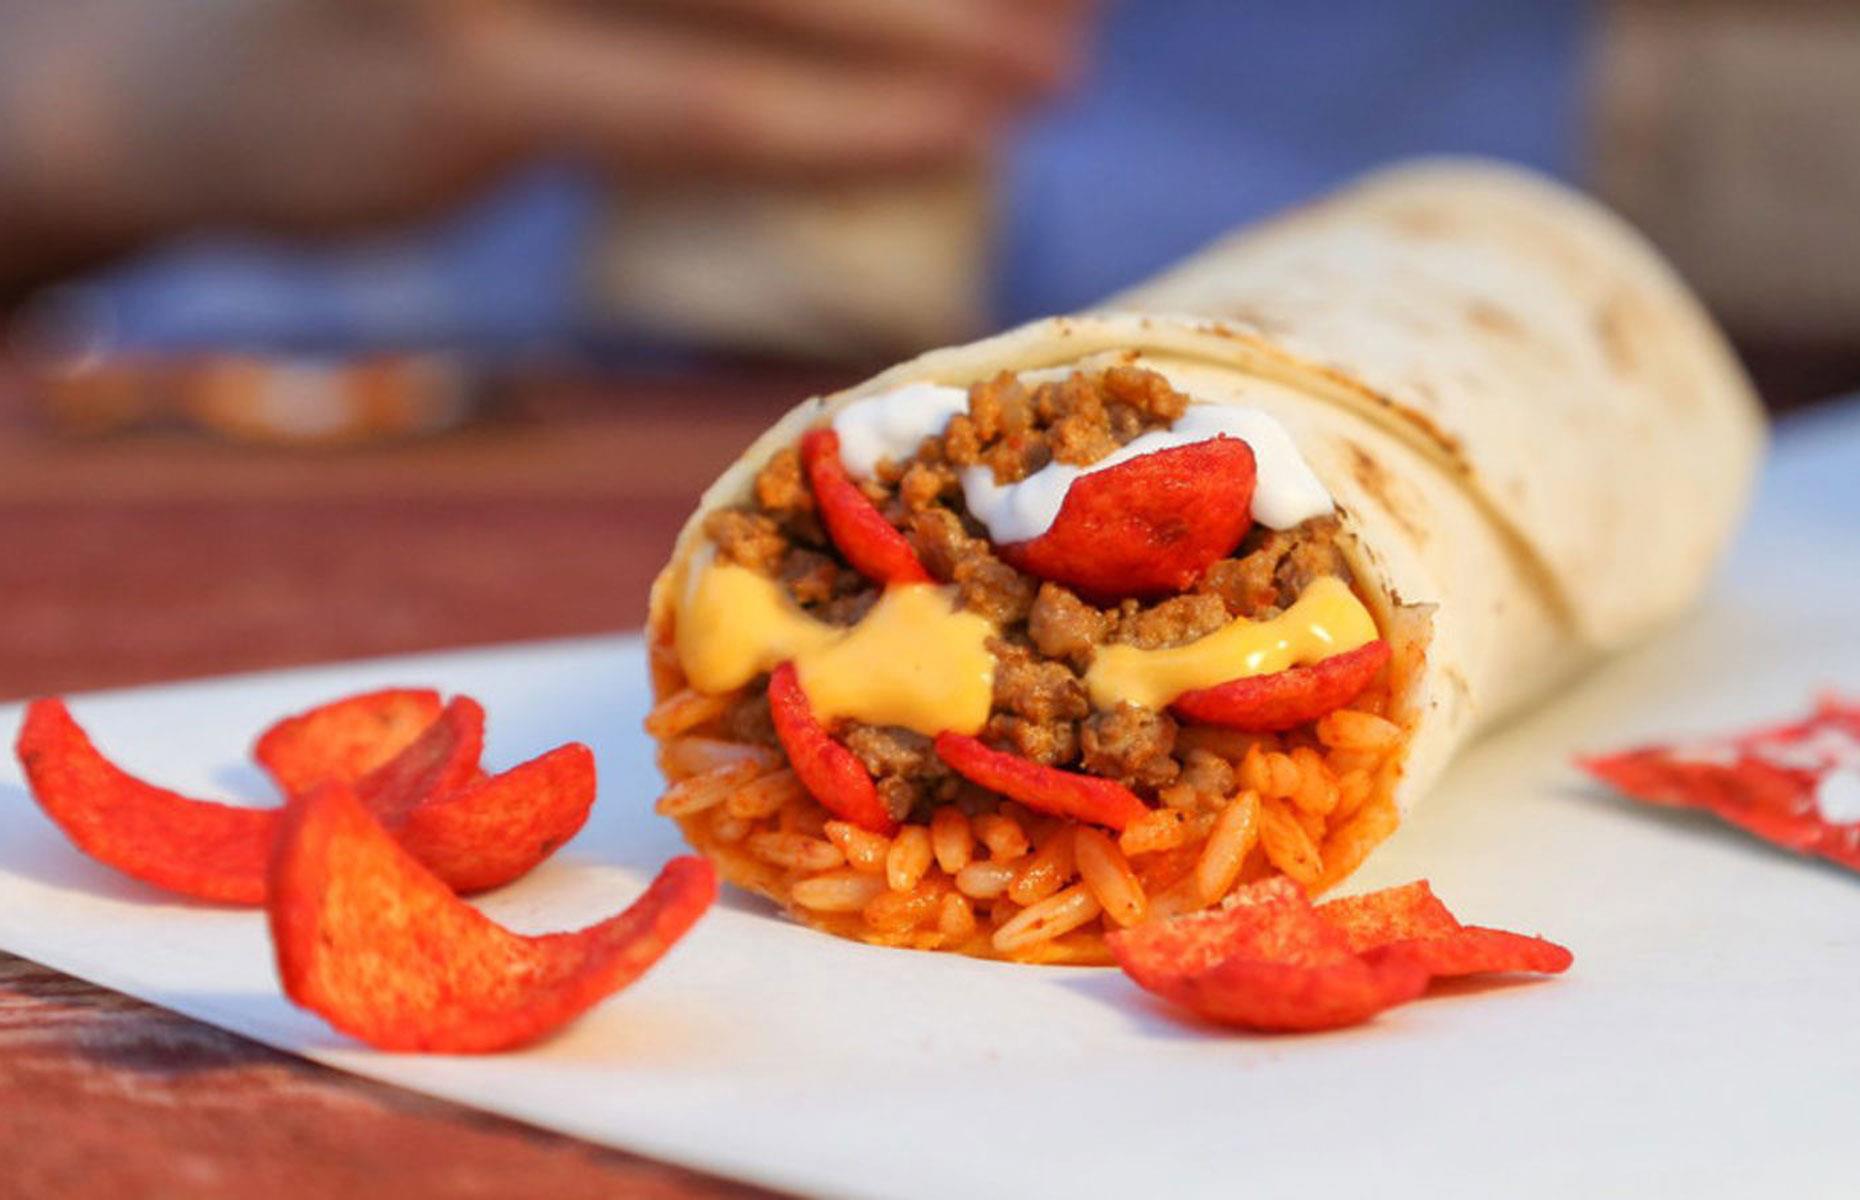 Taco Bell's boomerang burrito